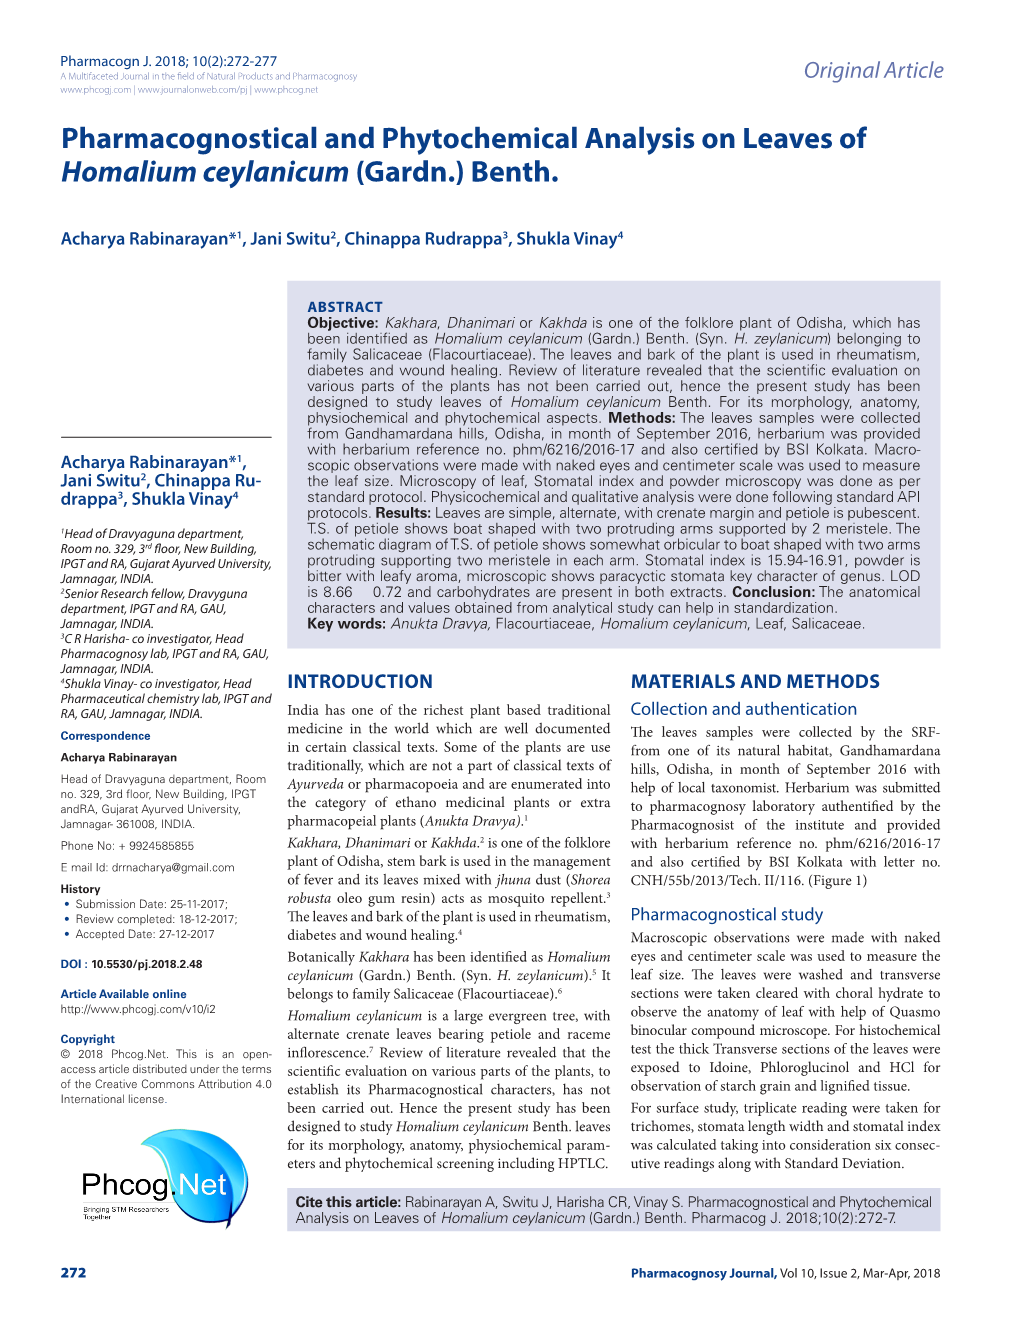 Pharmacognostical and Phytochemical Analysis on Leaves of Homalium Ceylanicum (Gardn.) Benth